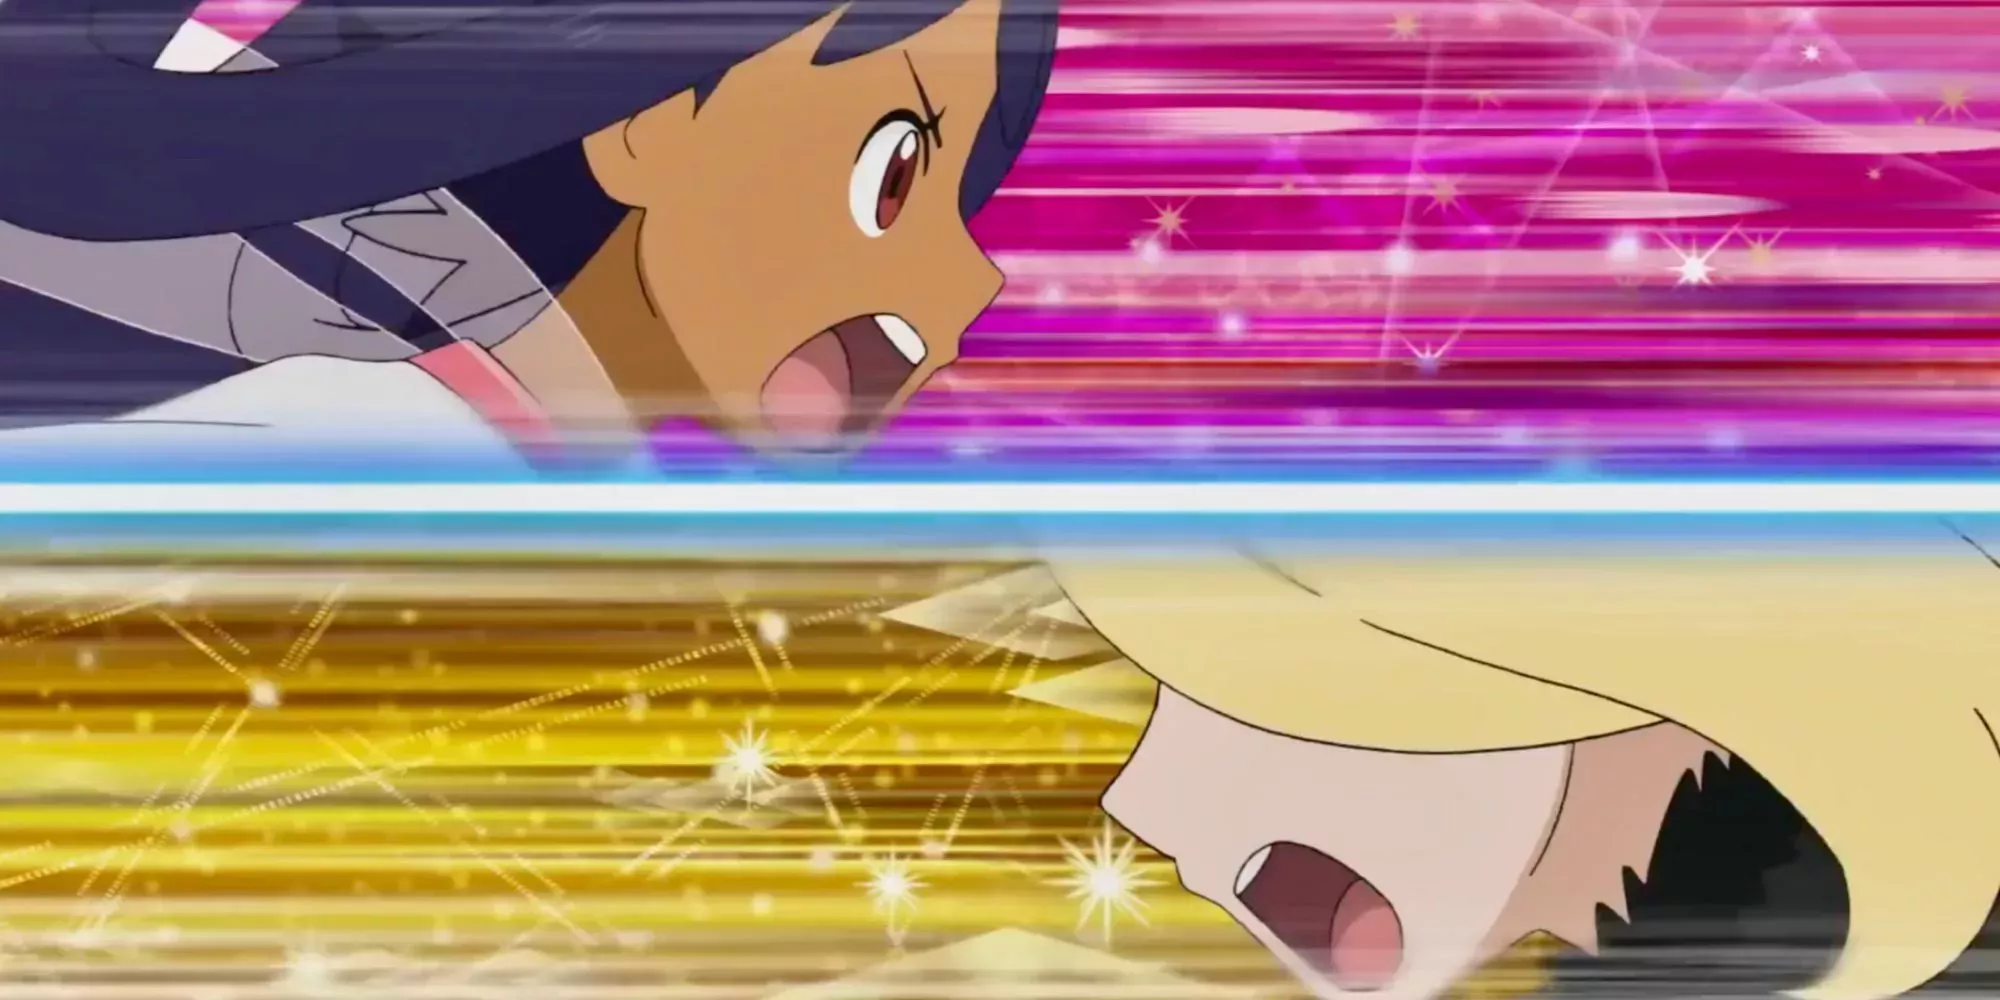 Iris vs Cynthia attack in unison in a still from Pokemon Journeys